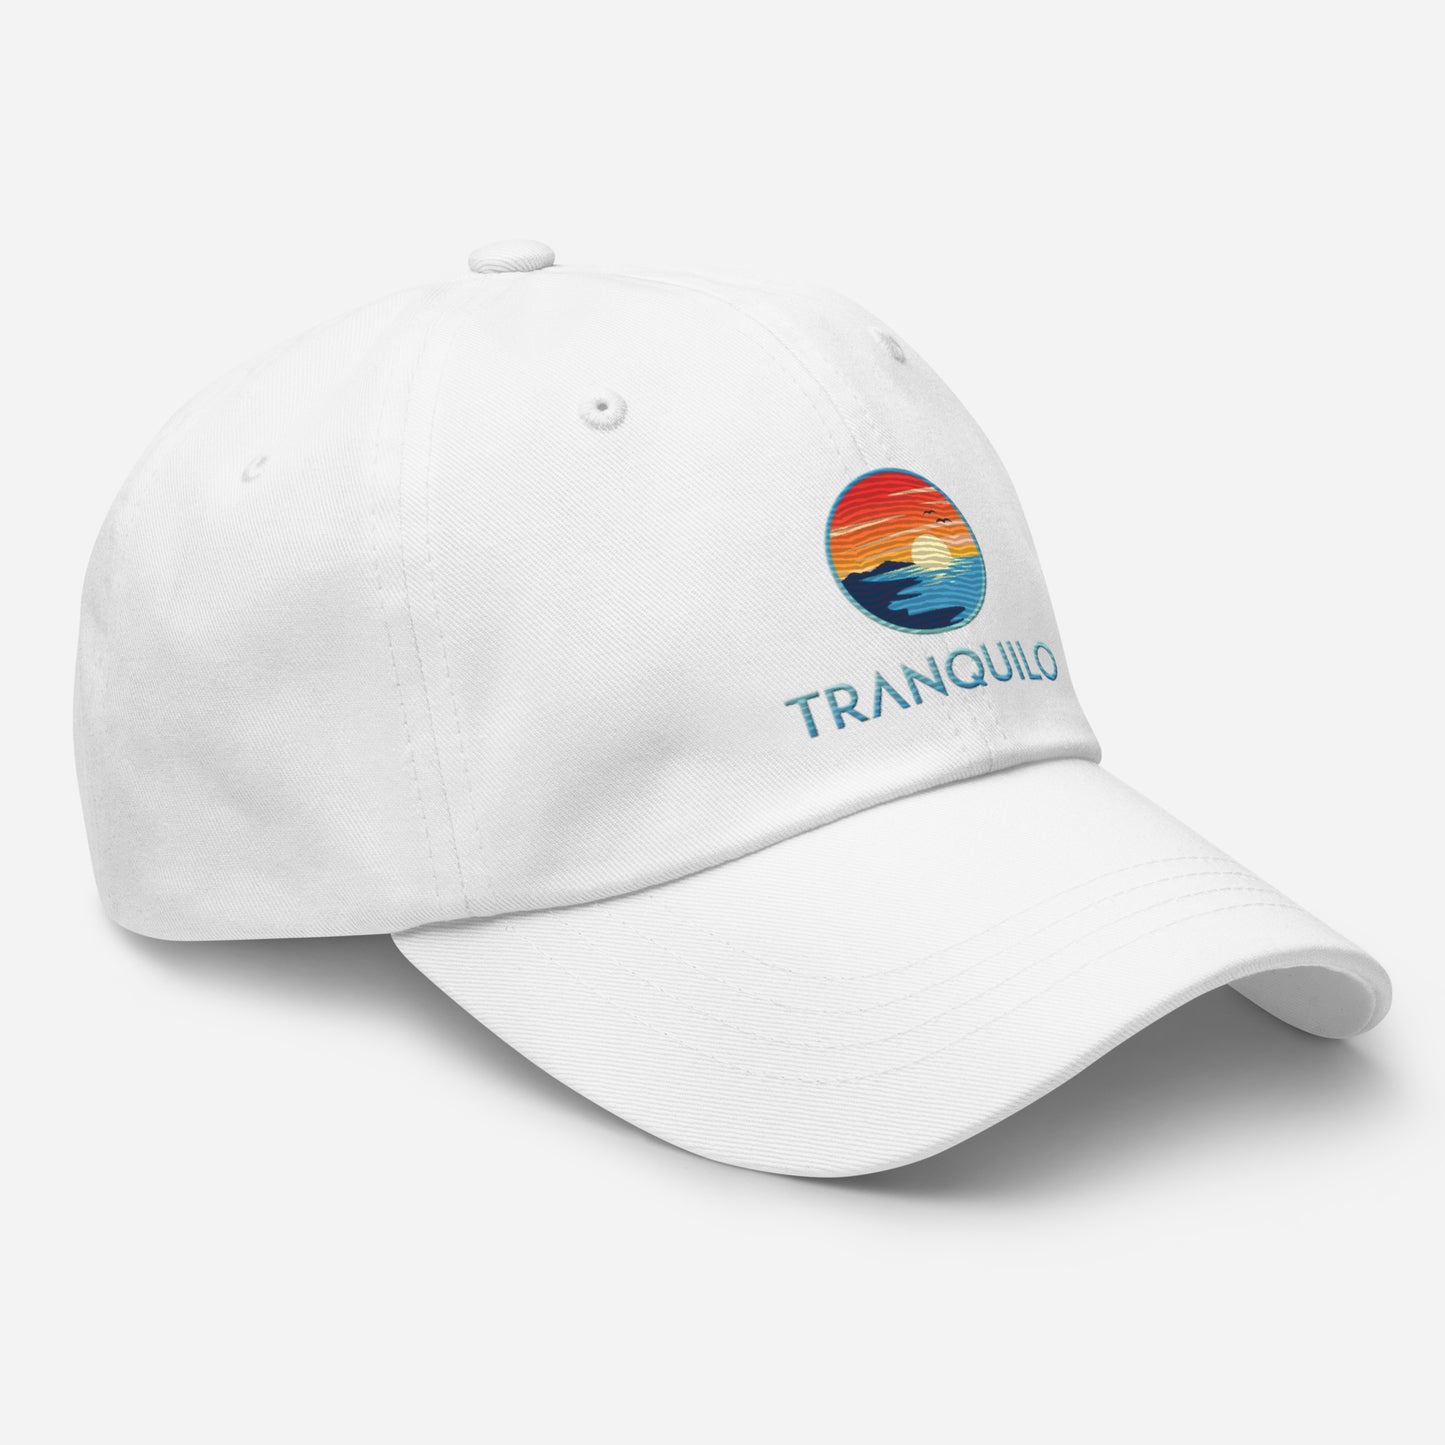 TRANQUILO Original Logo Dad hat